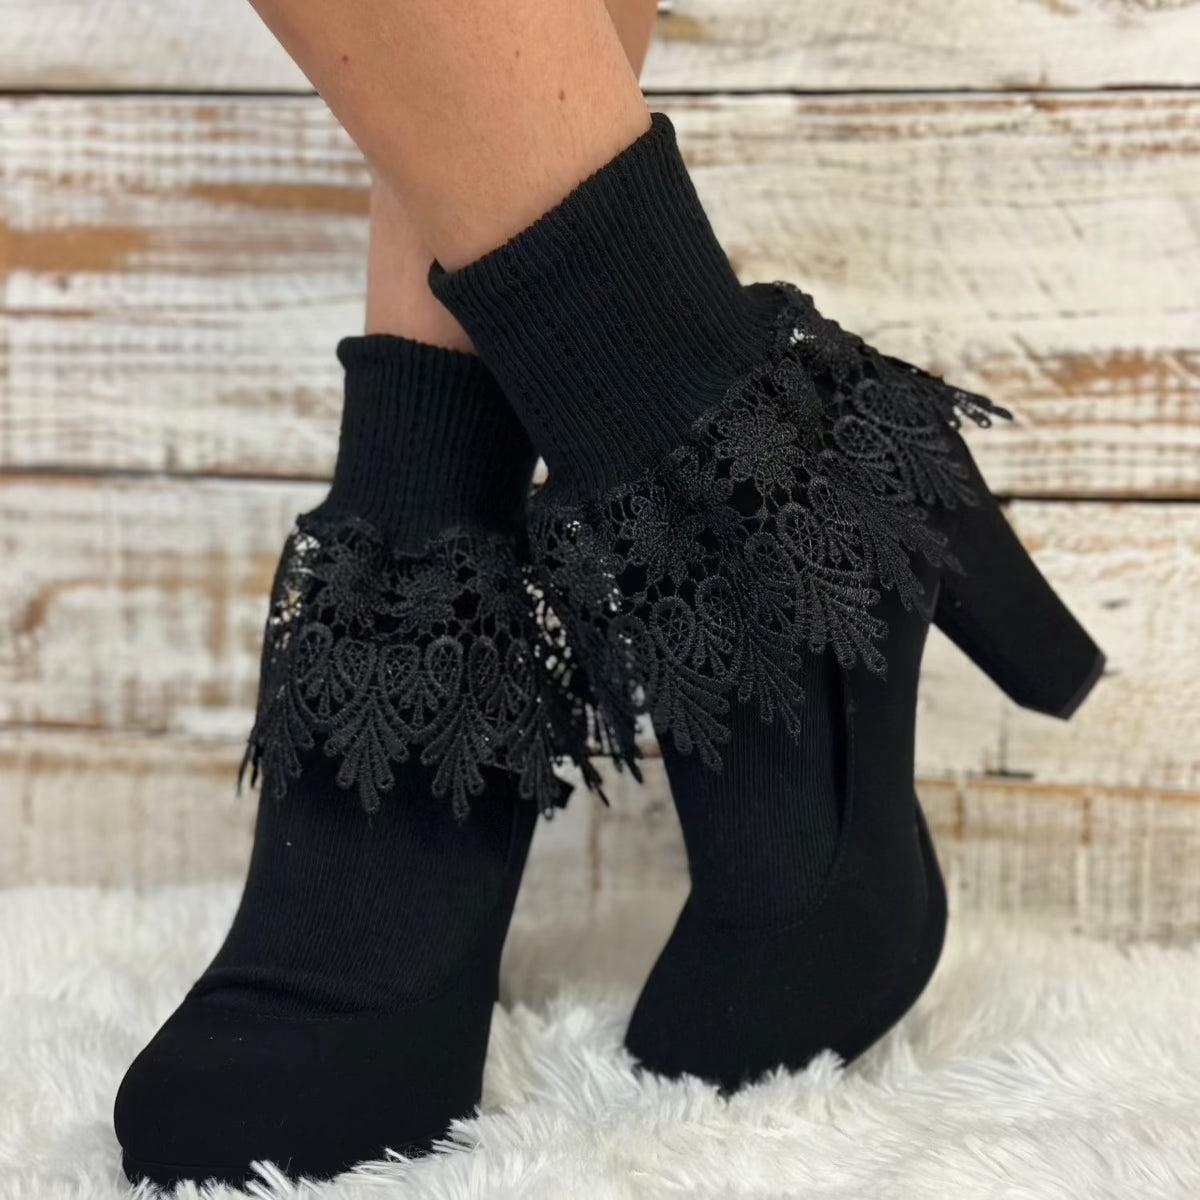 SIGNATURE lace ankle cuff socks women - black, cool lace socks women’s near me